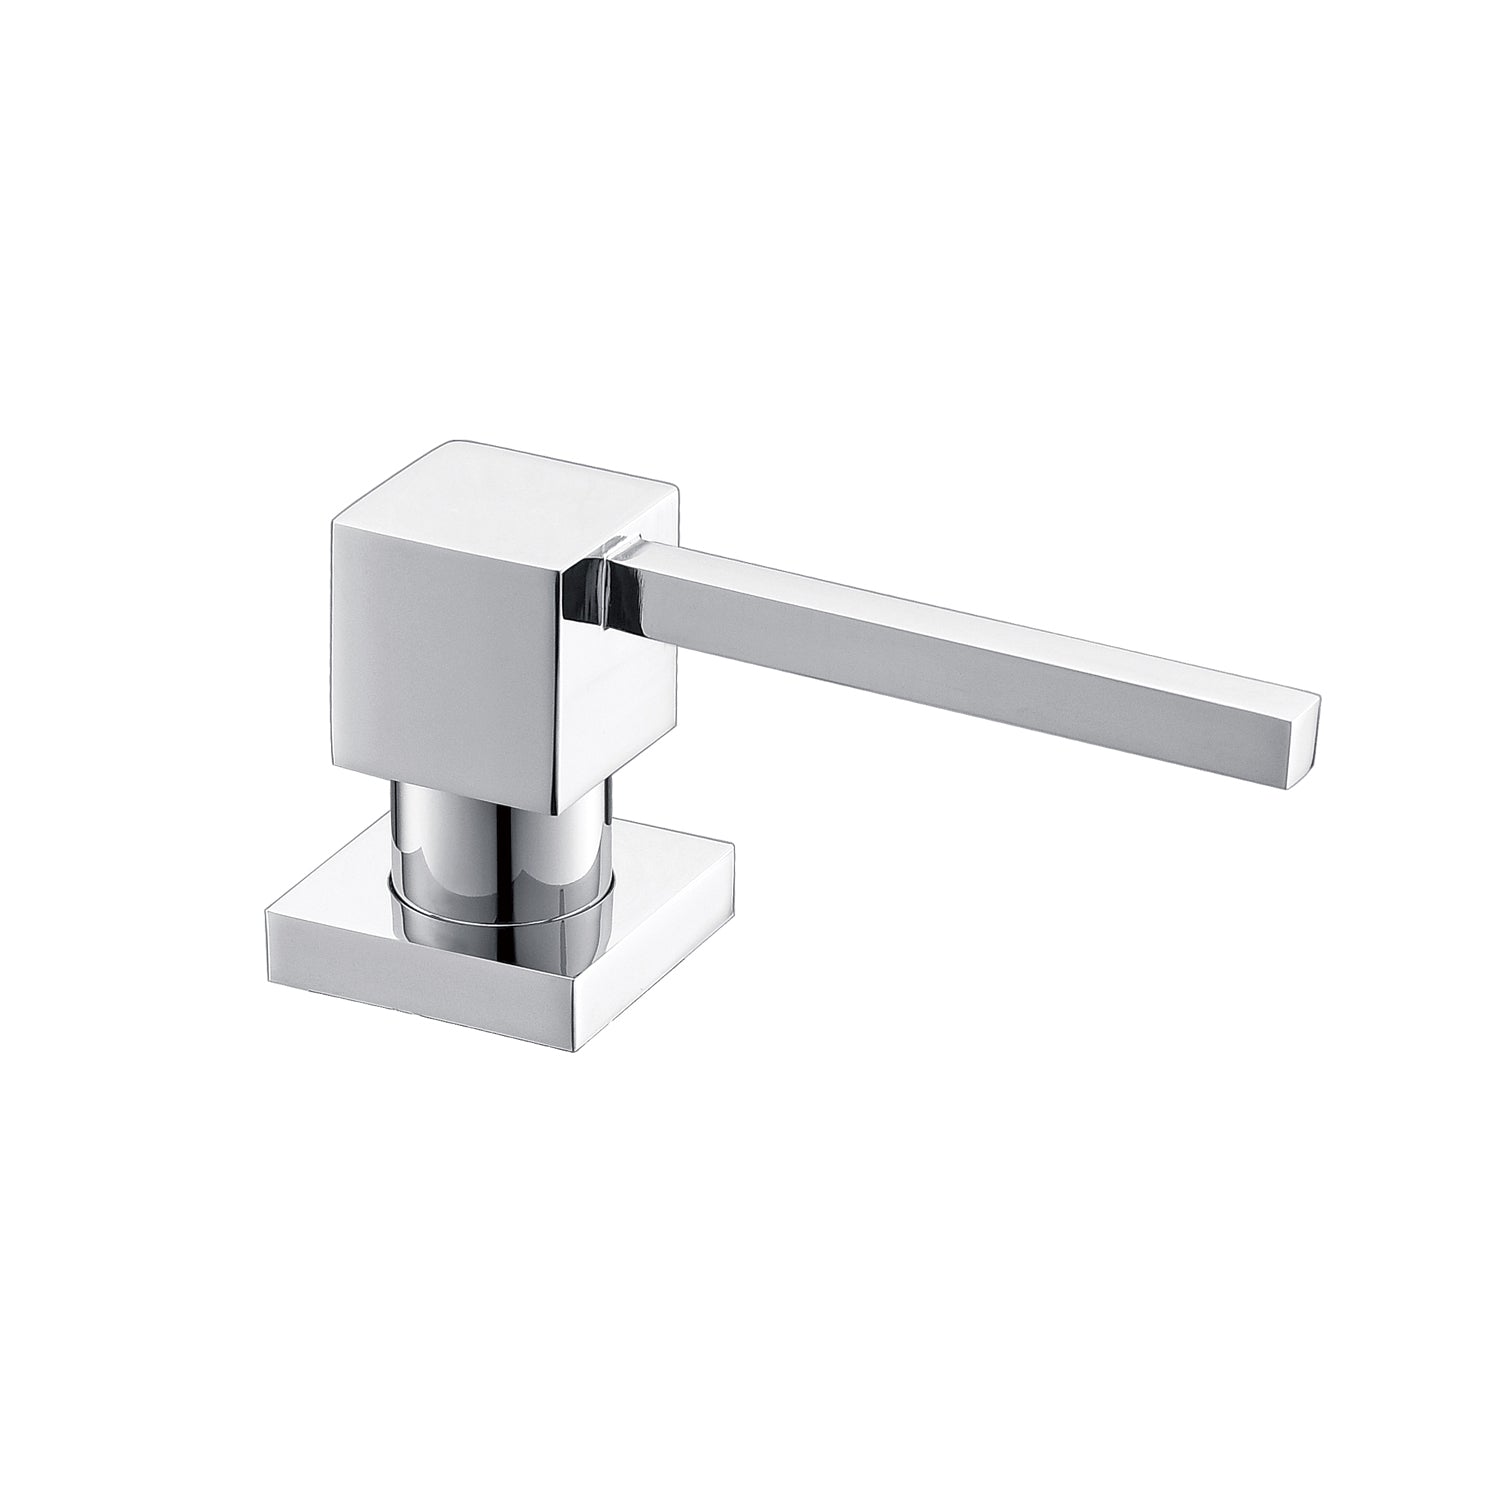 DAX Square Kitchen Sink Soap Dispenser, Deck Mount, Brass Body, Chrome Finish, 2-9/16 x 12-7/16 x 3-5/8 Inches (DAX-1001-CR)